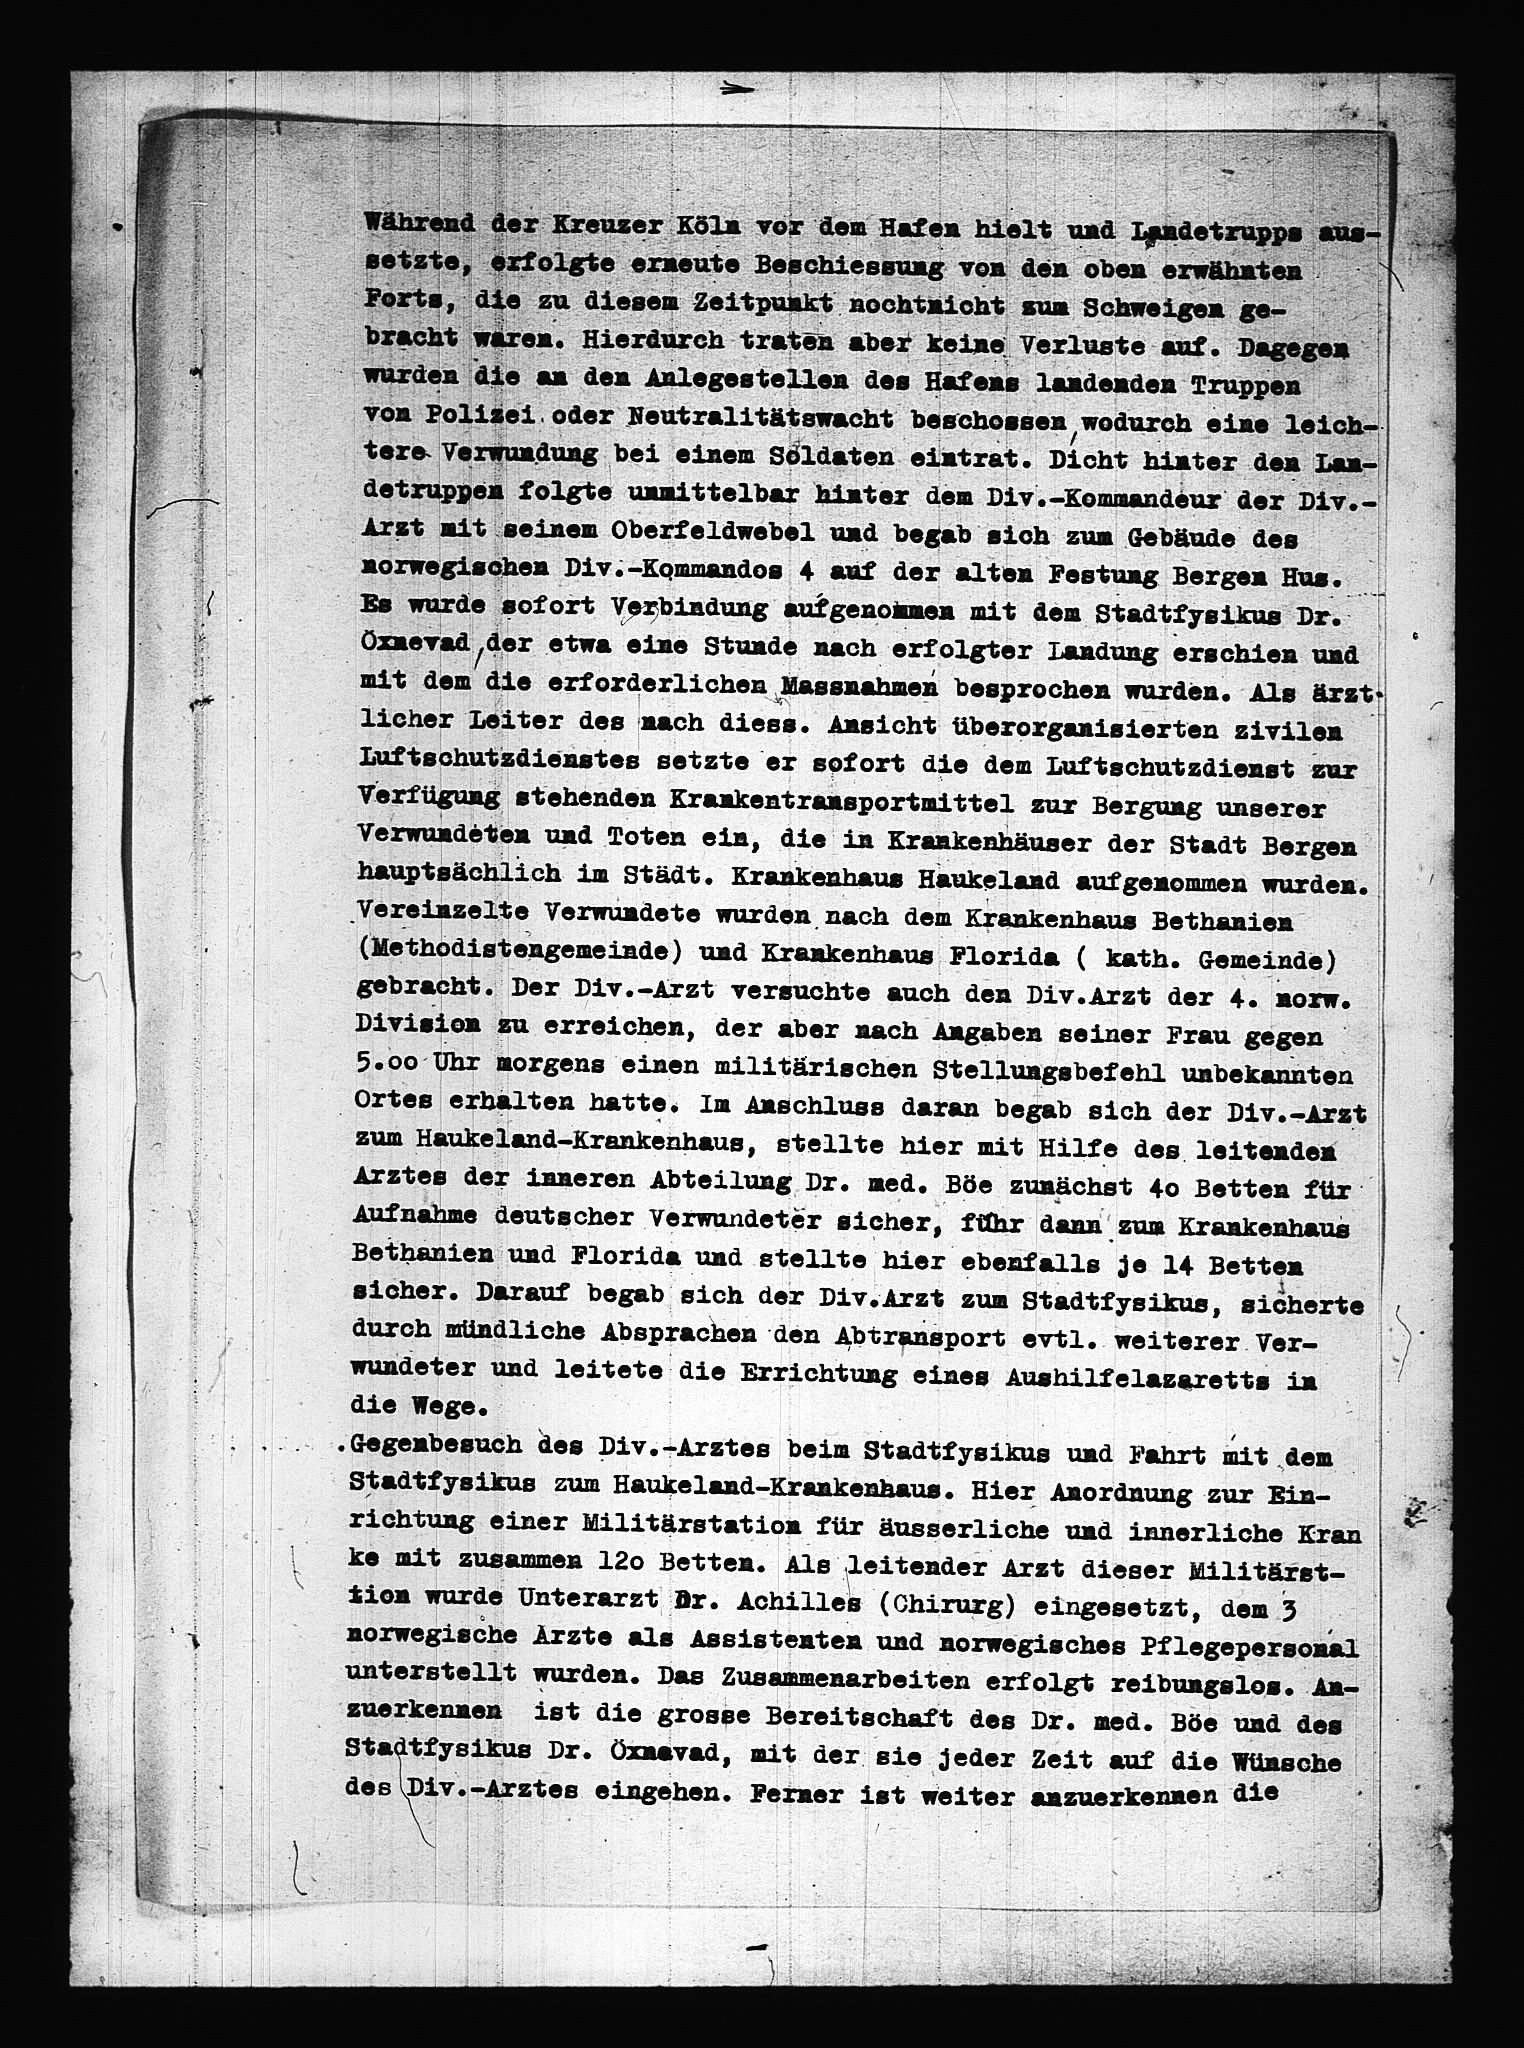 Documents Section, RA/RAFA-2200/V/L0086: Amerikansk mikrofilm "Captured German Documents".
Box No. 725.  FKA jnr. 601/1954., 1940, p. 422